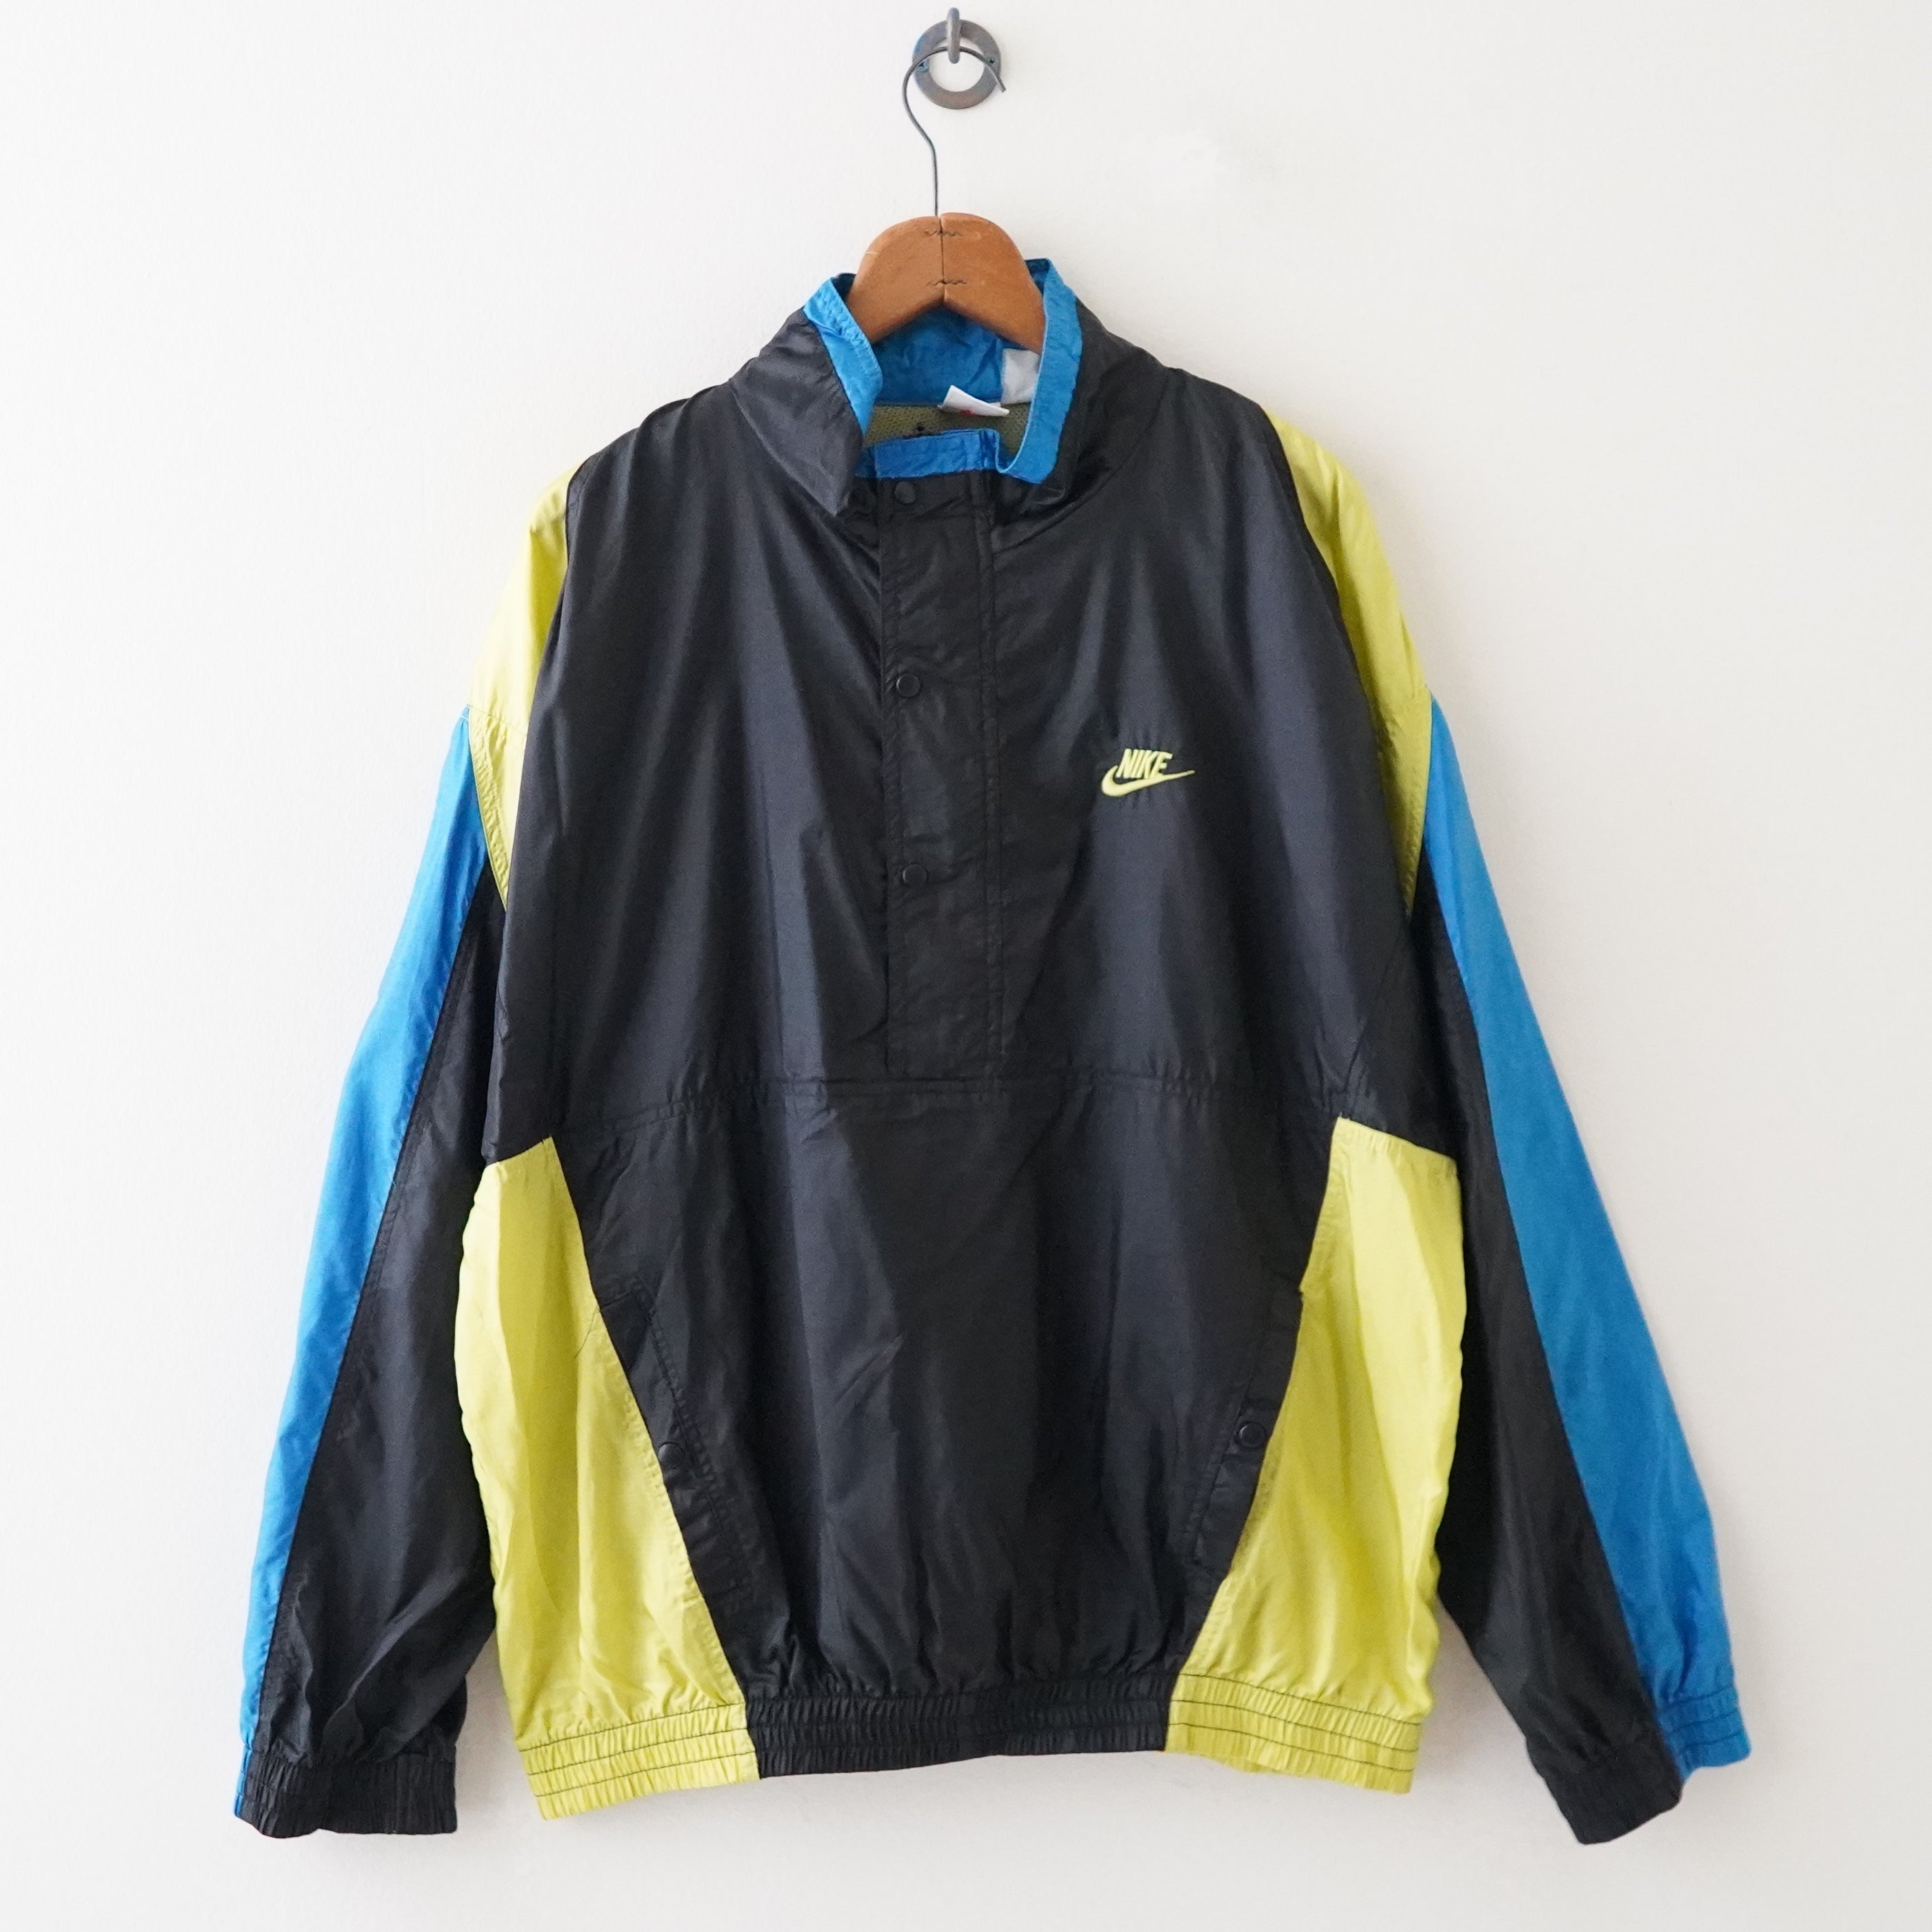 '80s〜'90s 希少 レア NIKE nylon jacket3980s〜